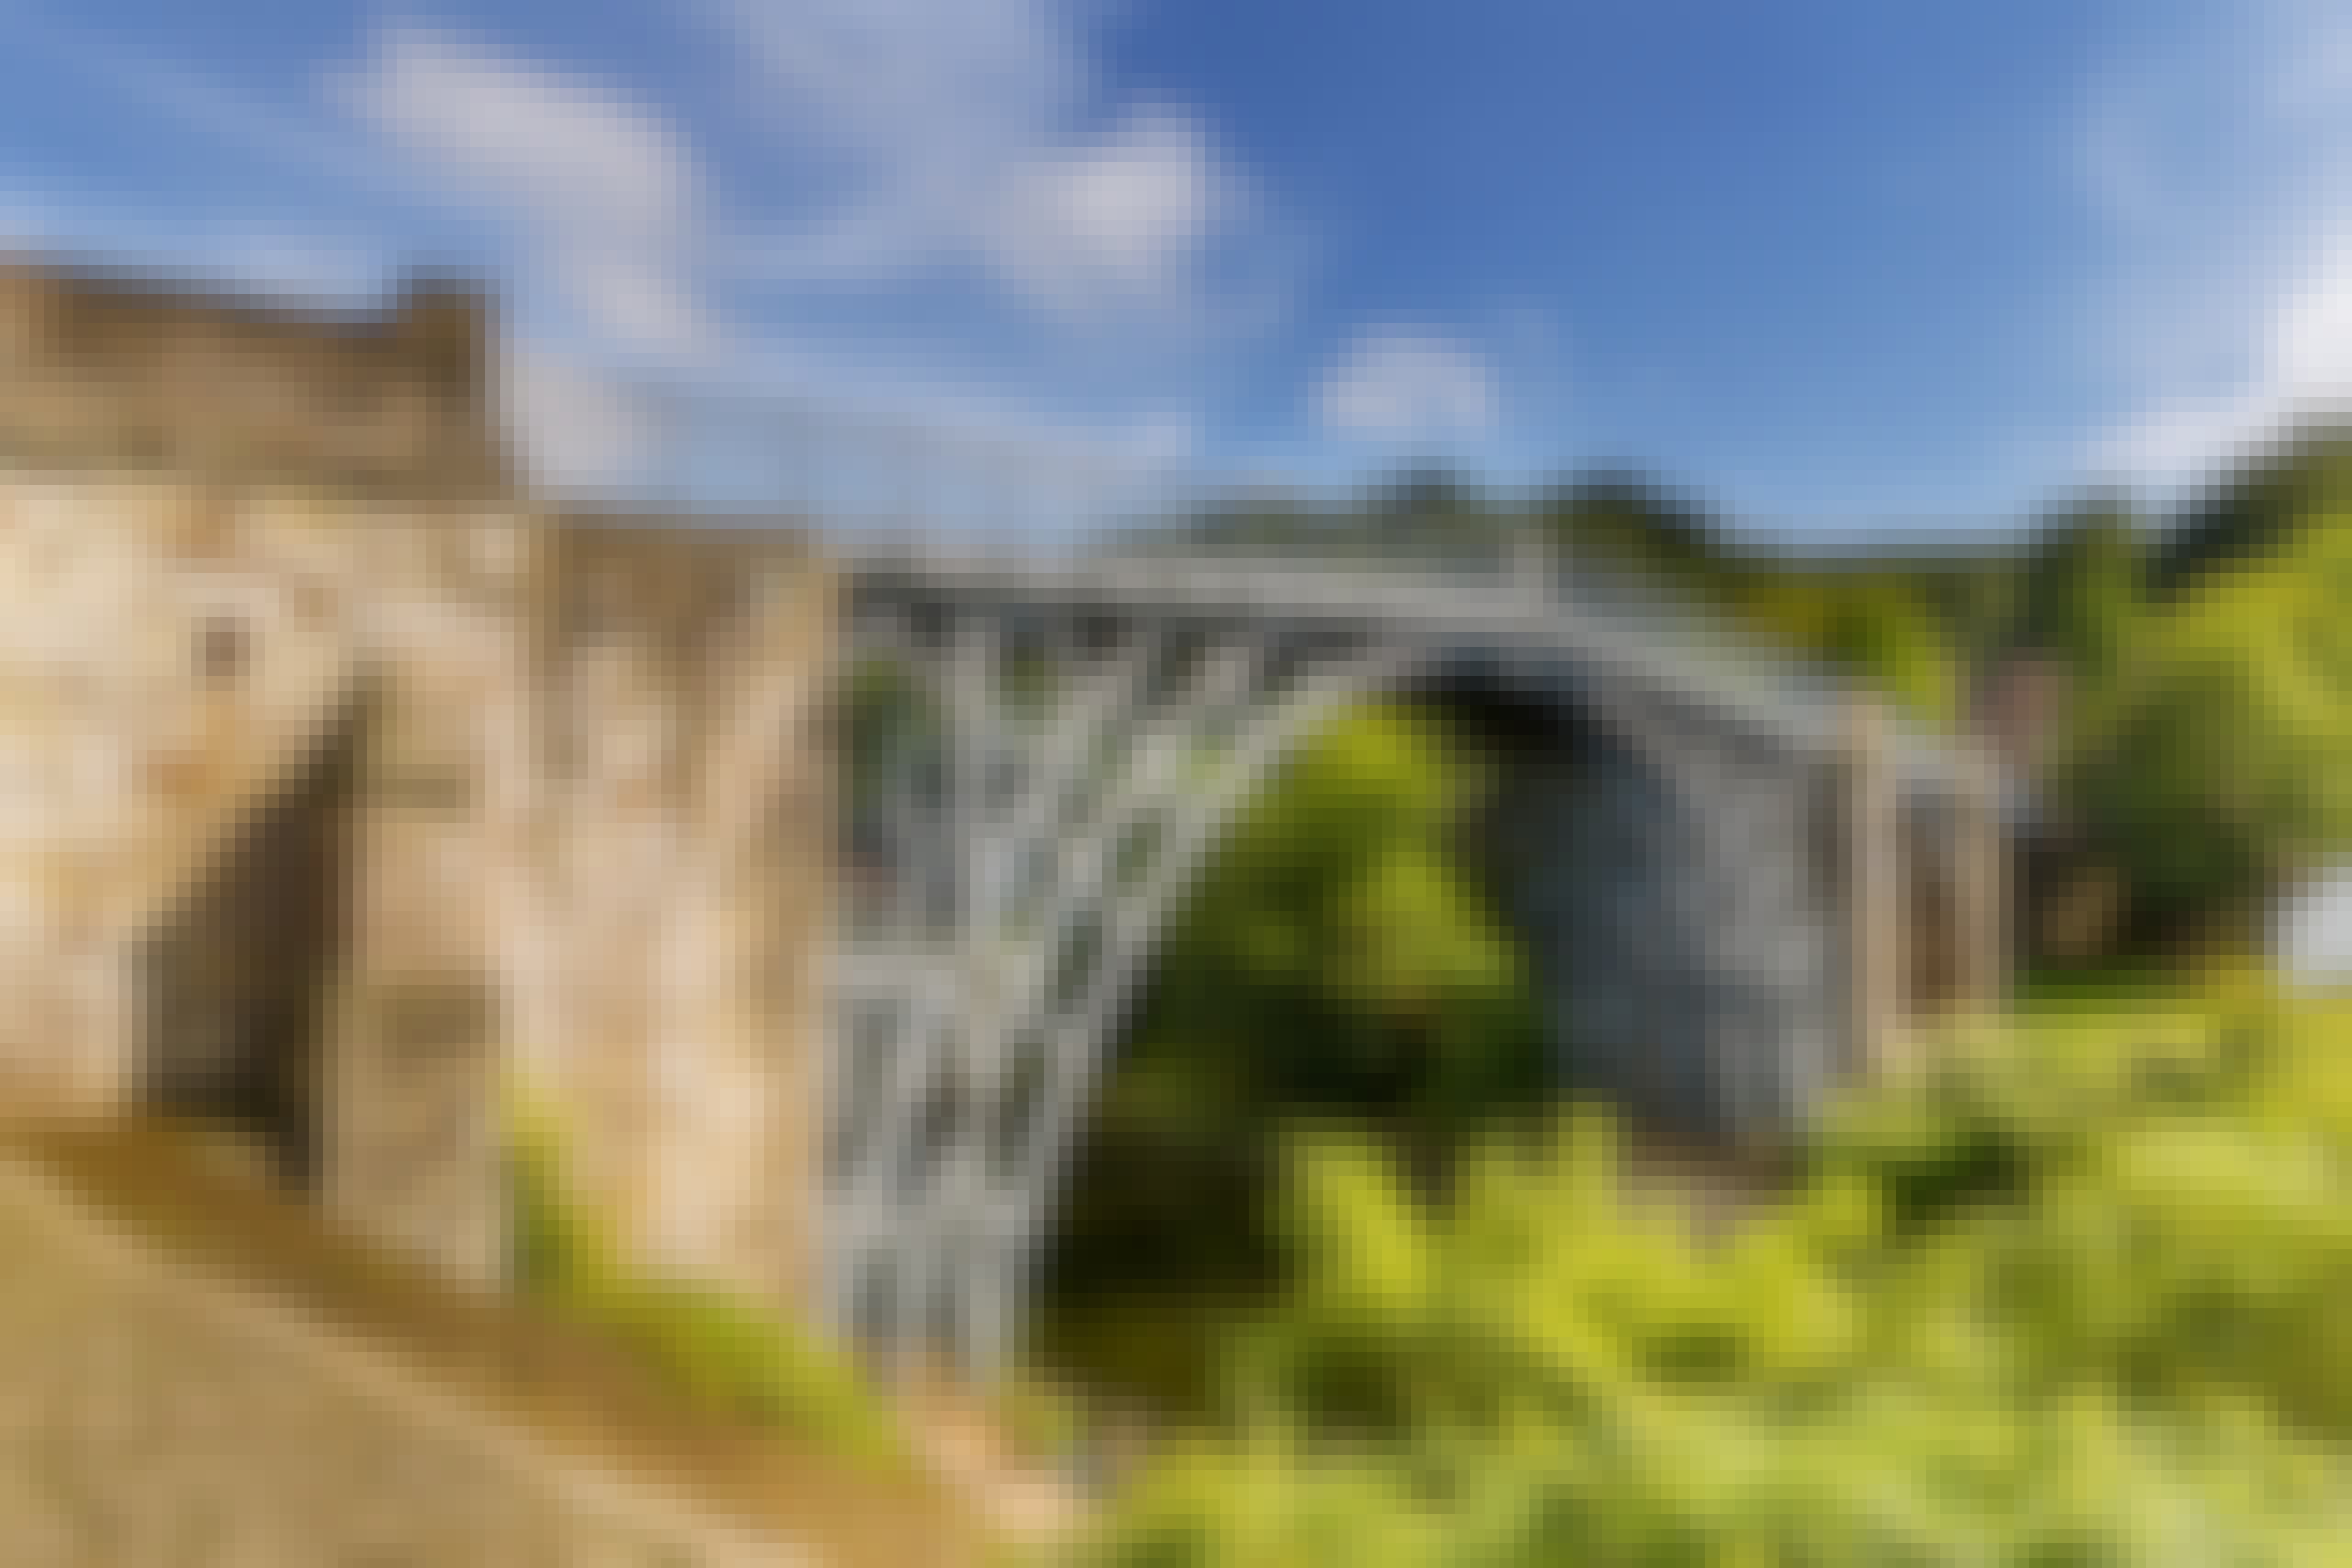 The Iron Bridge over the River Severn, Ironbridge Gorge, Shropshire, England.